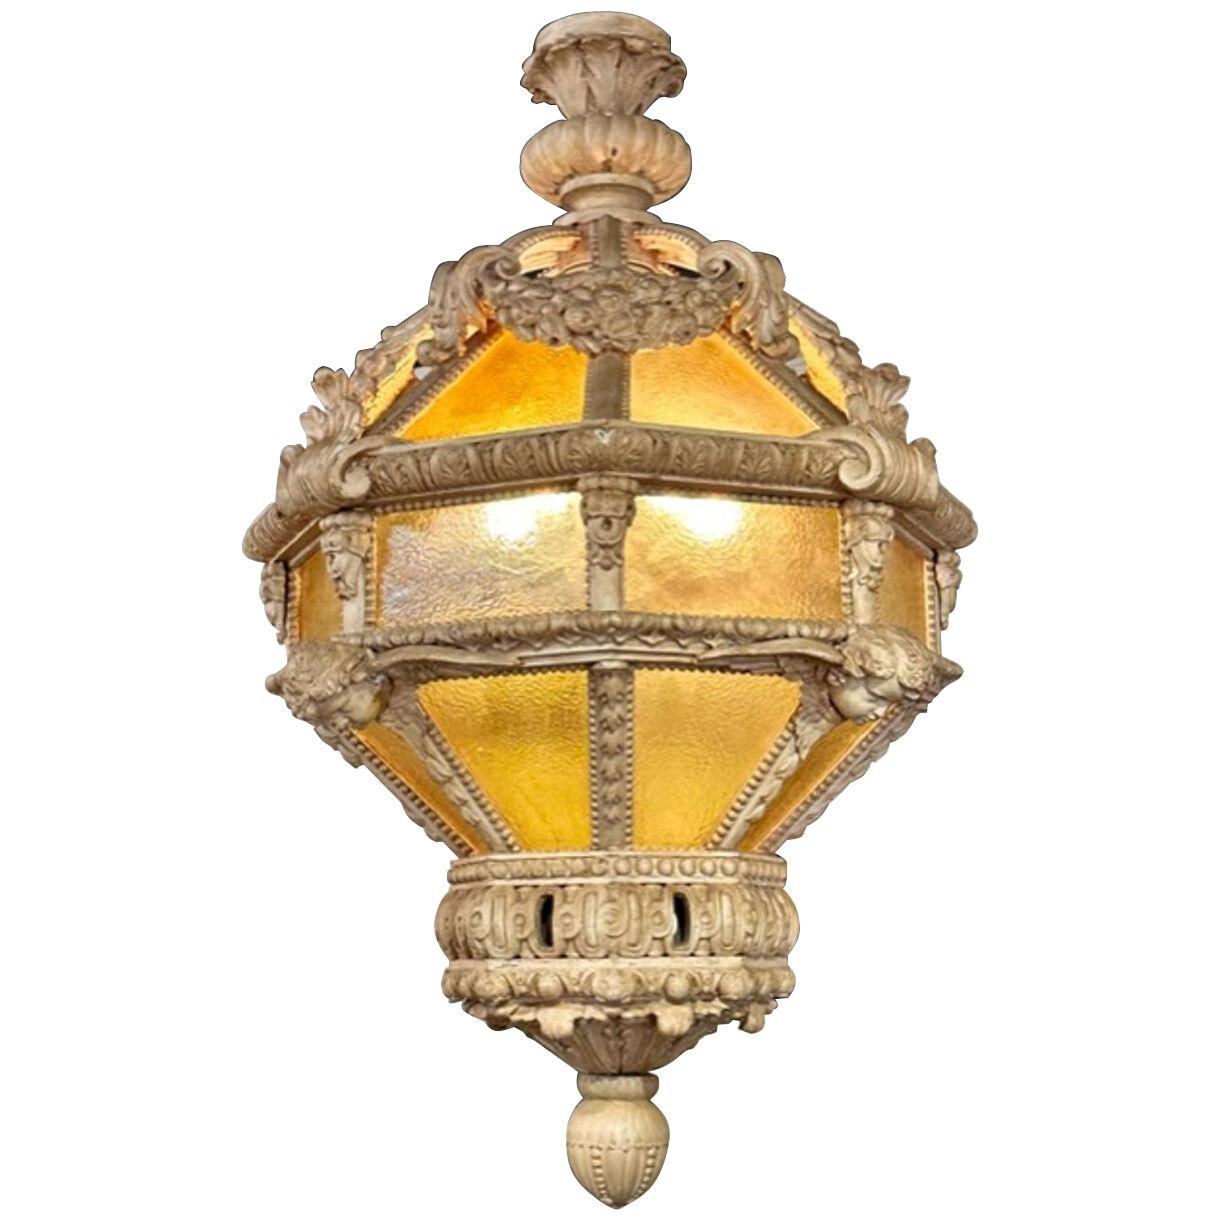 Large Italian Stripped Wood Lantern